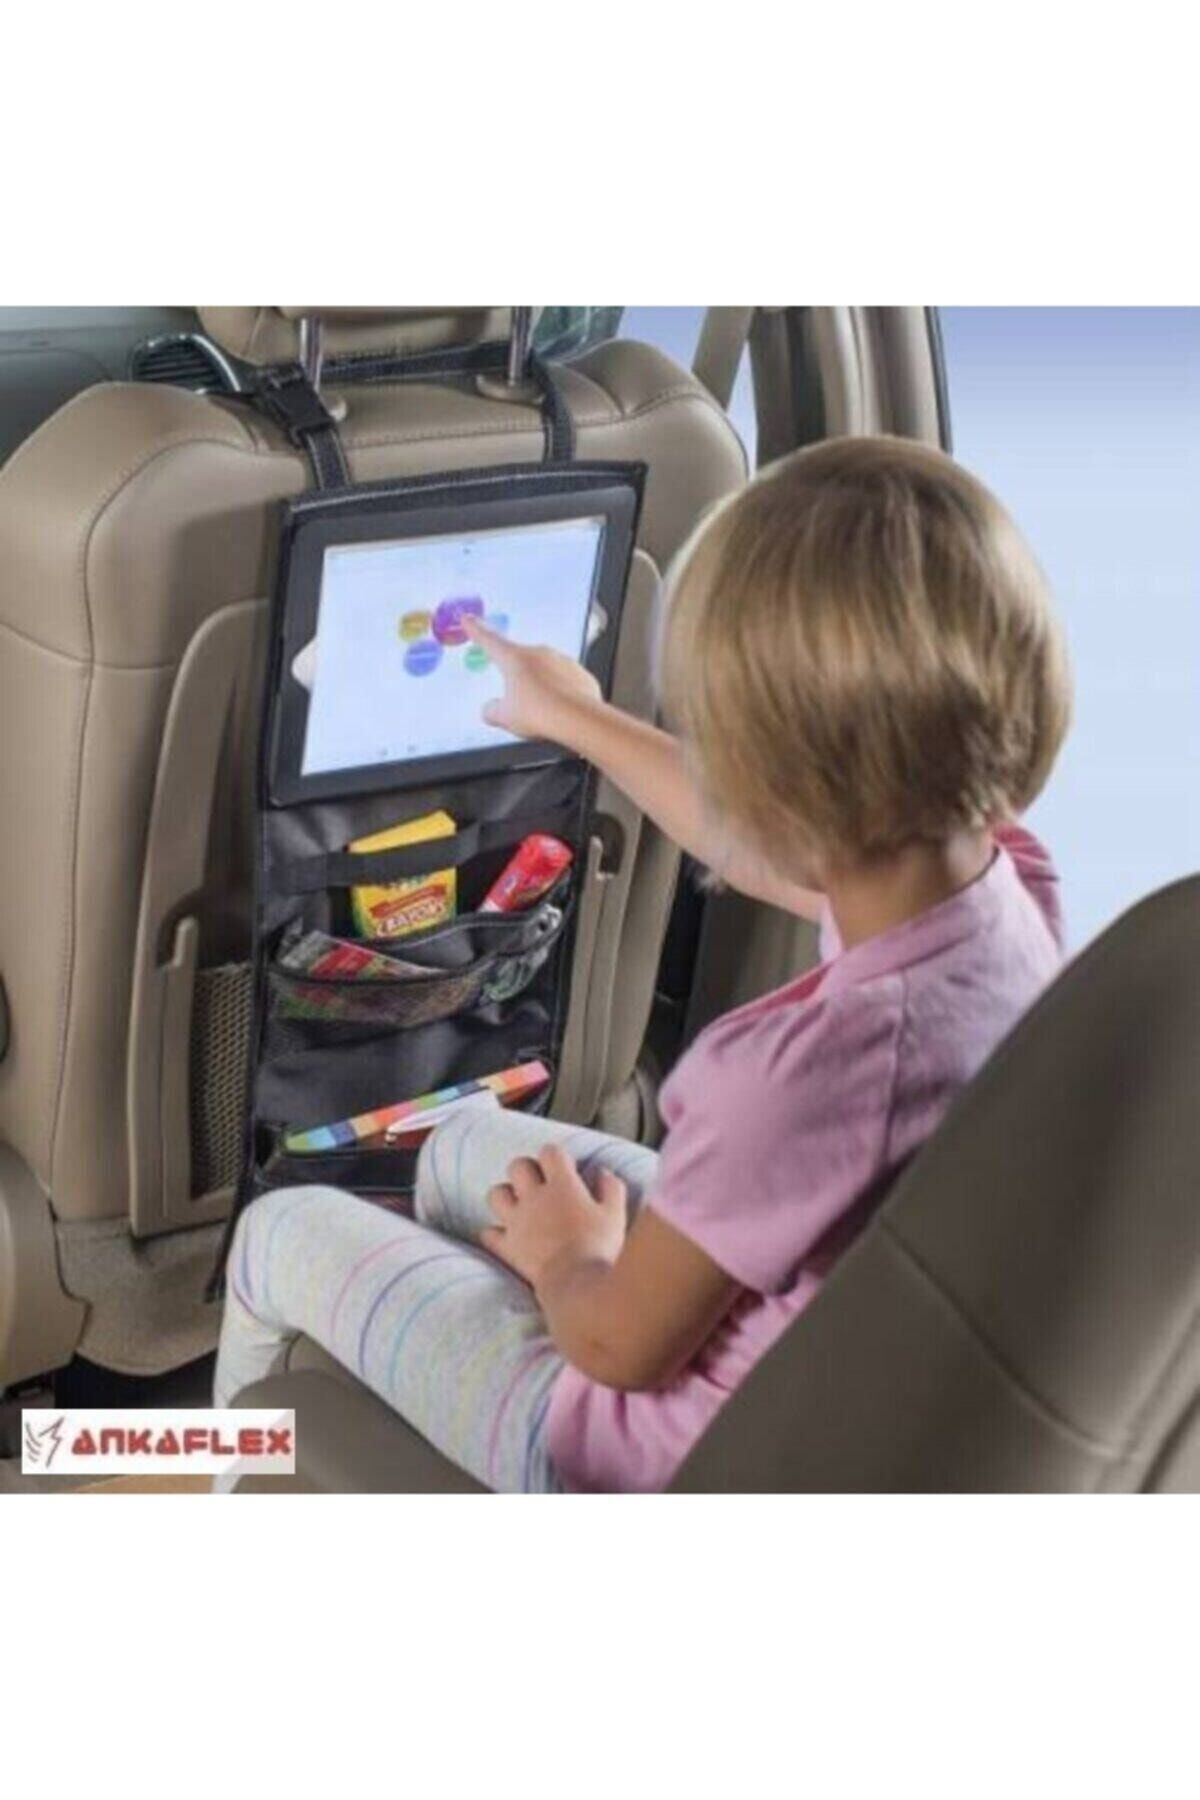 Ankaflex Car In-Vehicle Auto Seat Back Tablet Holder Practical Pocket  Organizer Bag Organizer